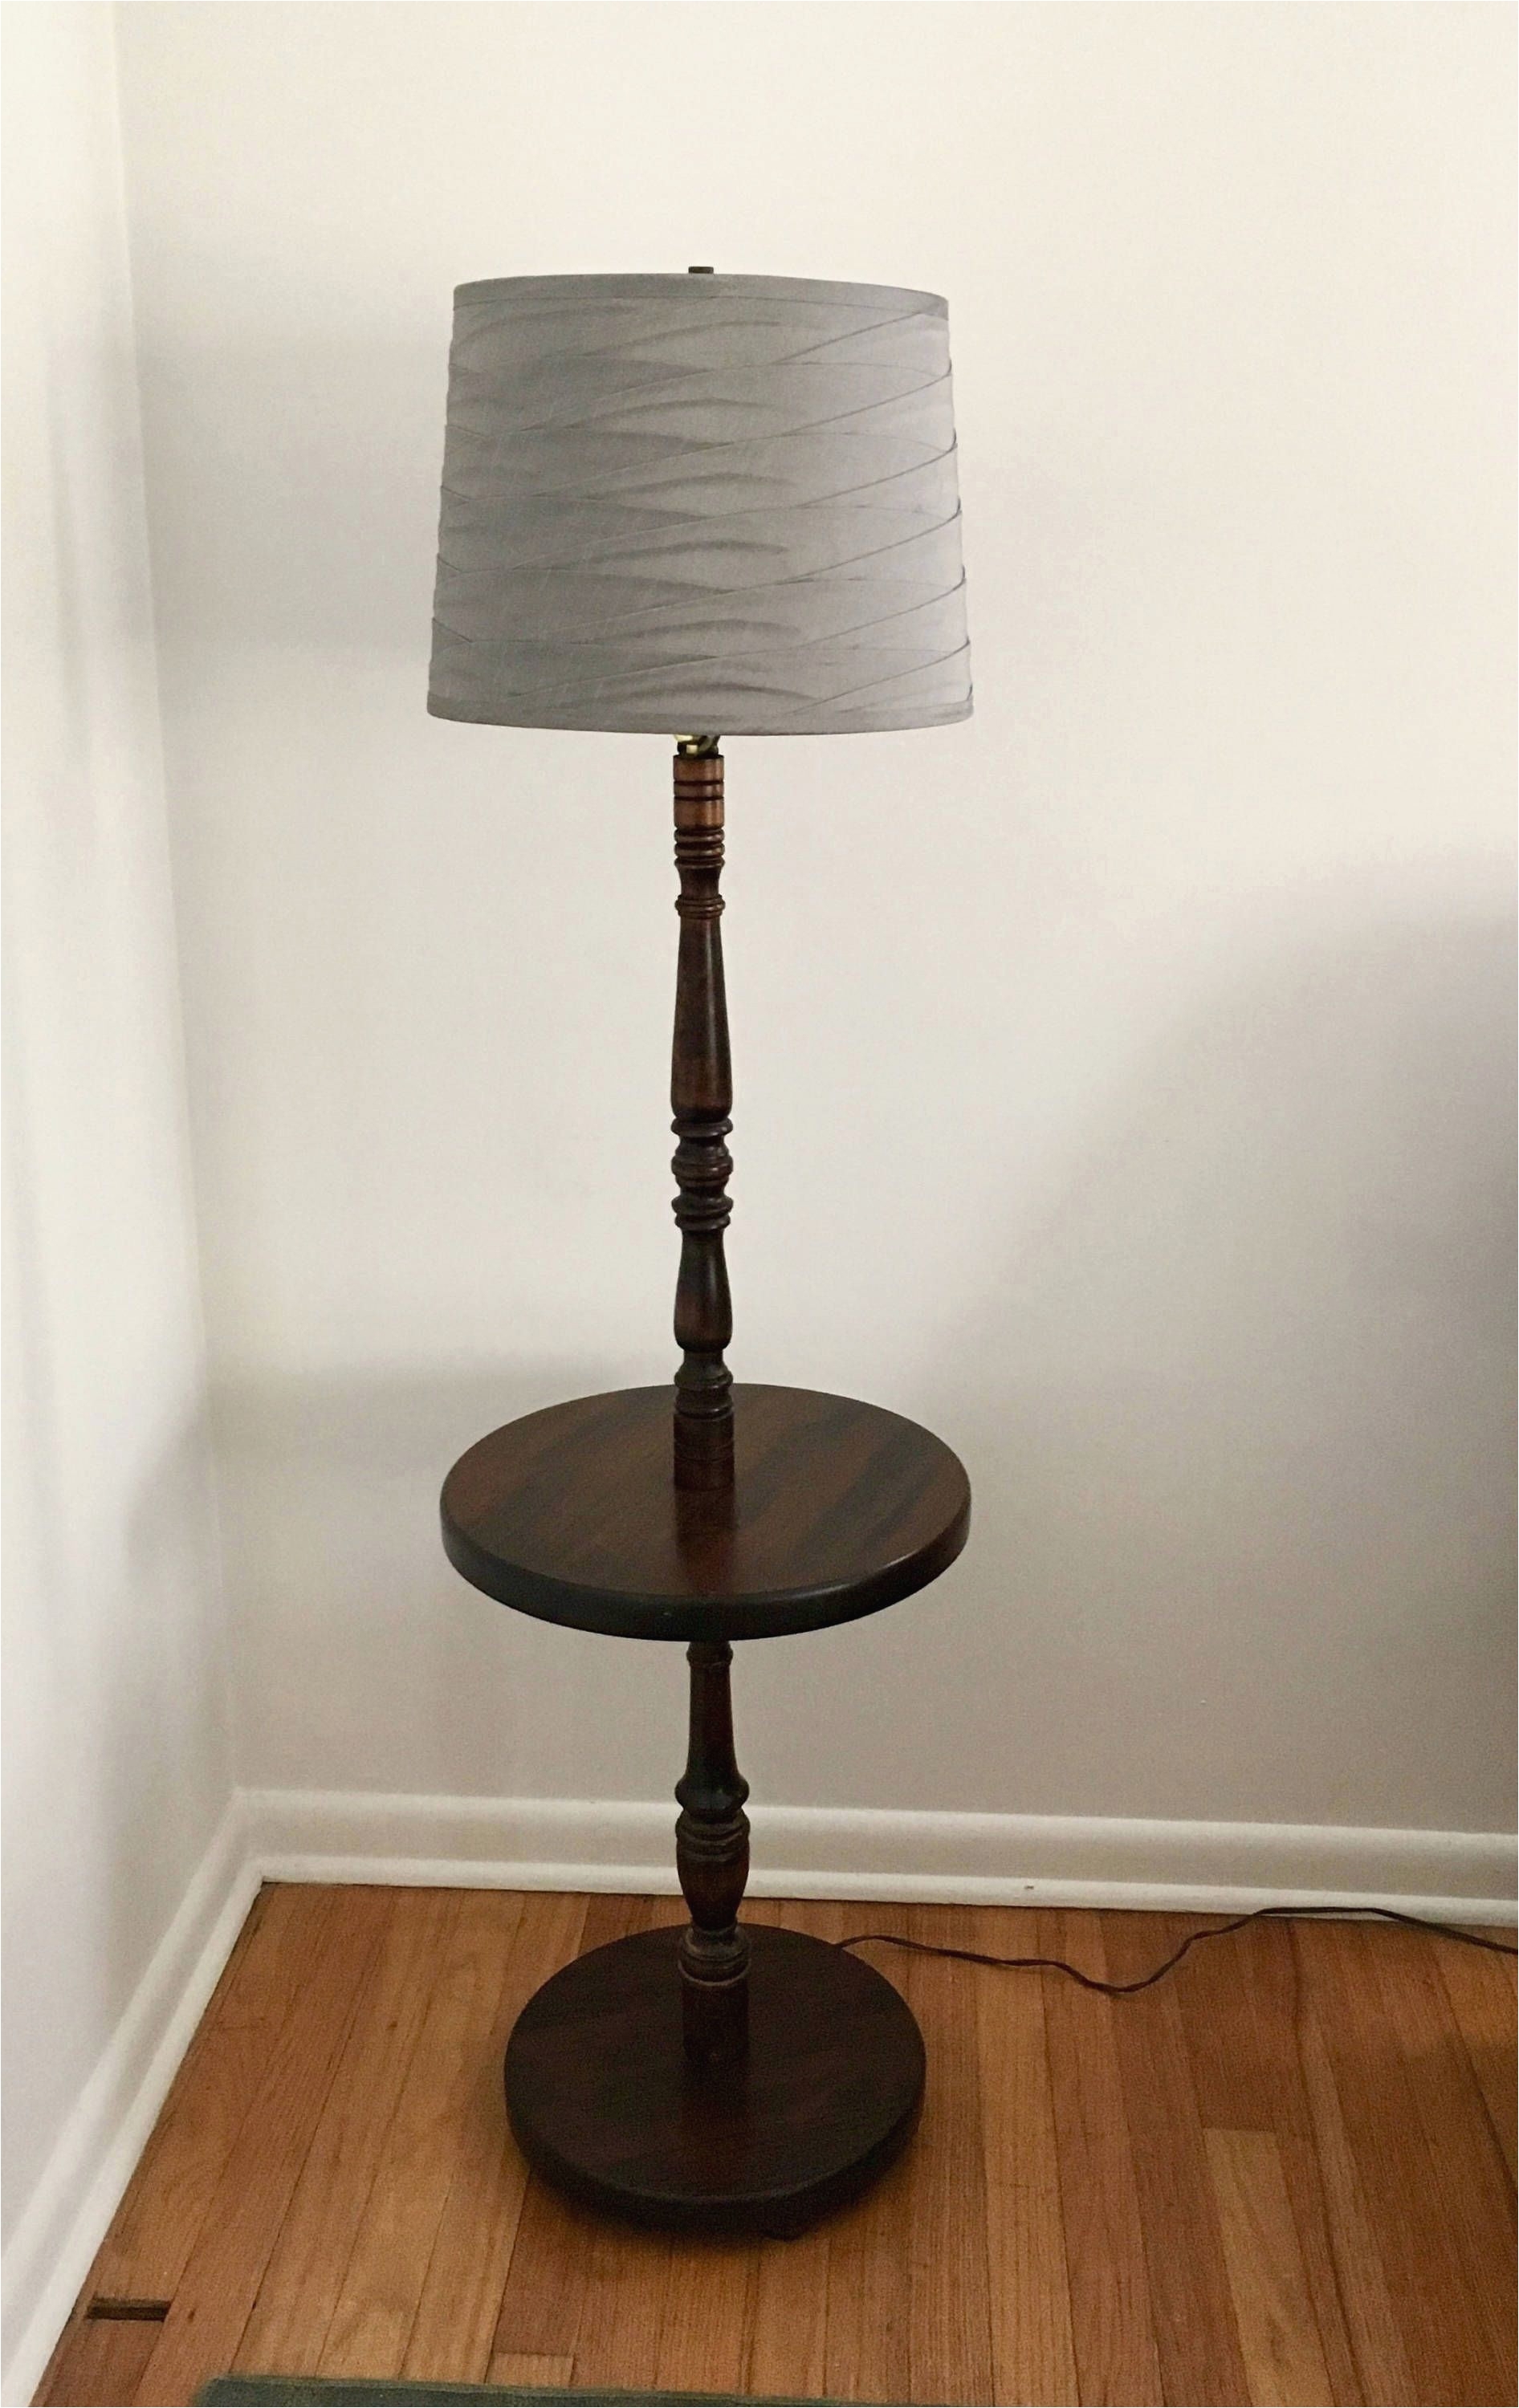 ottlite desk lamp elegant decorating with floor lamps luxury lamps lamp art lamp art 0d